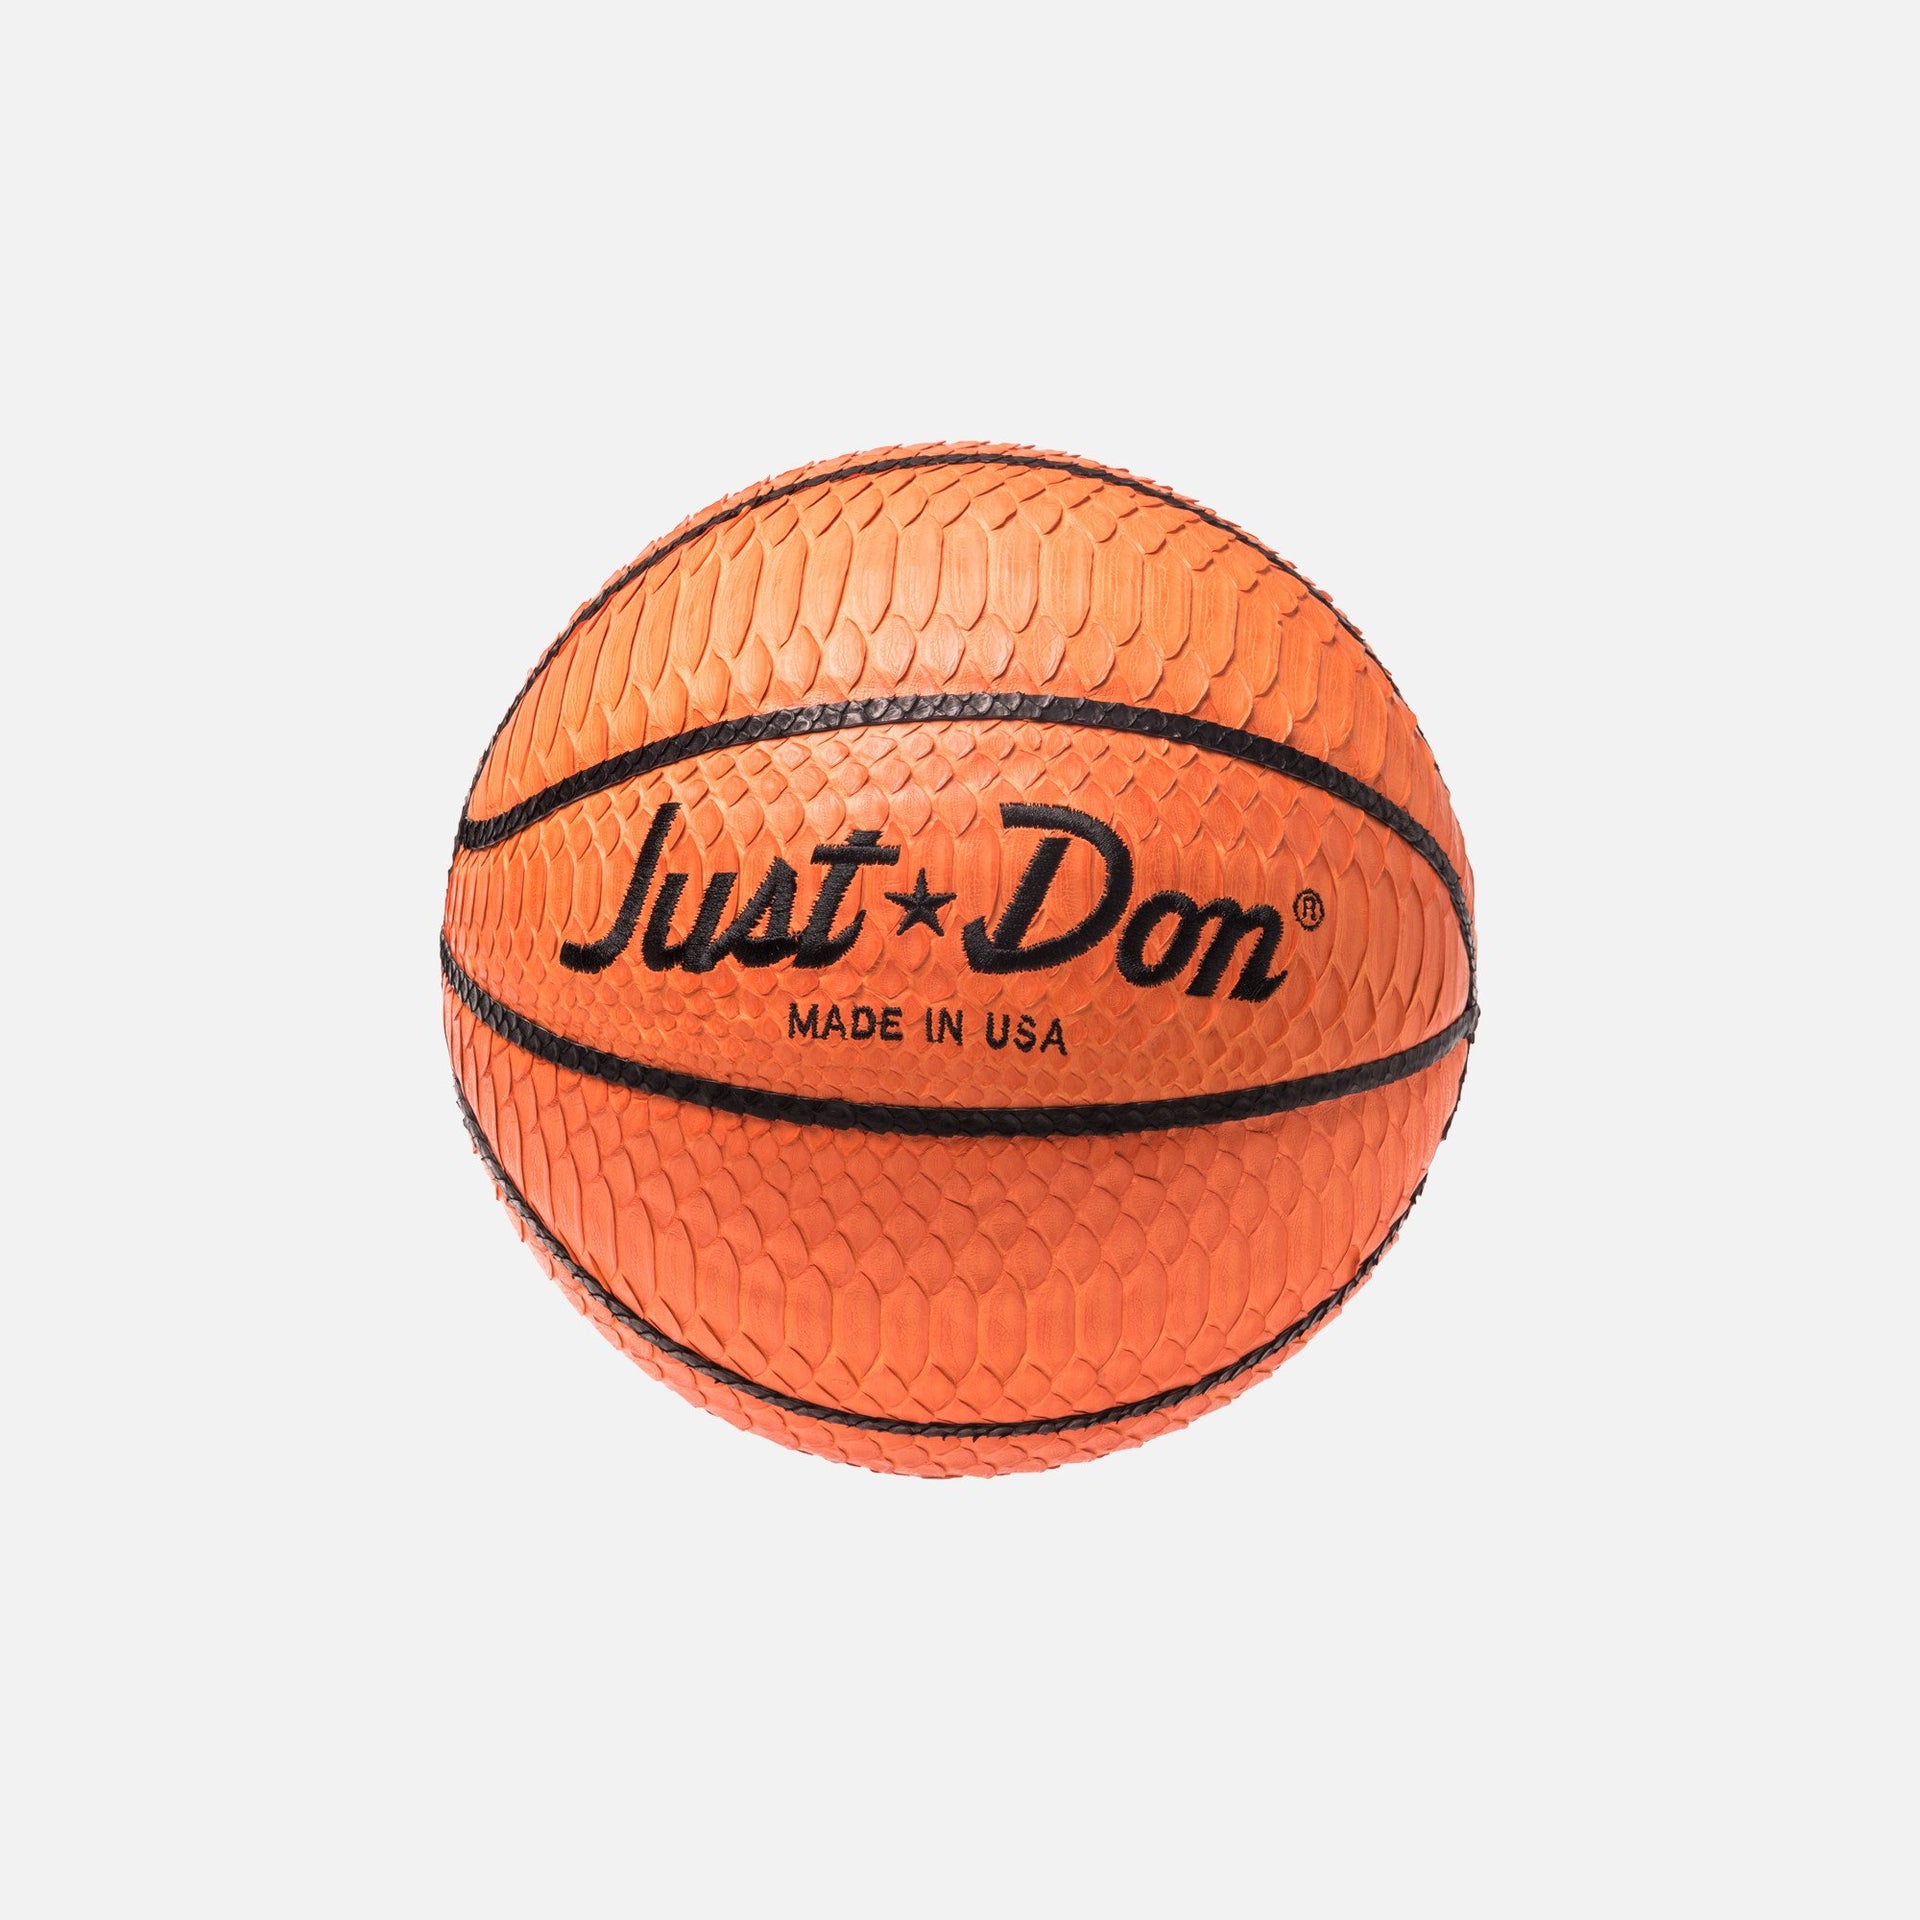 Just Don Basketball - Orange